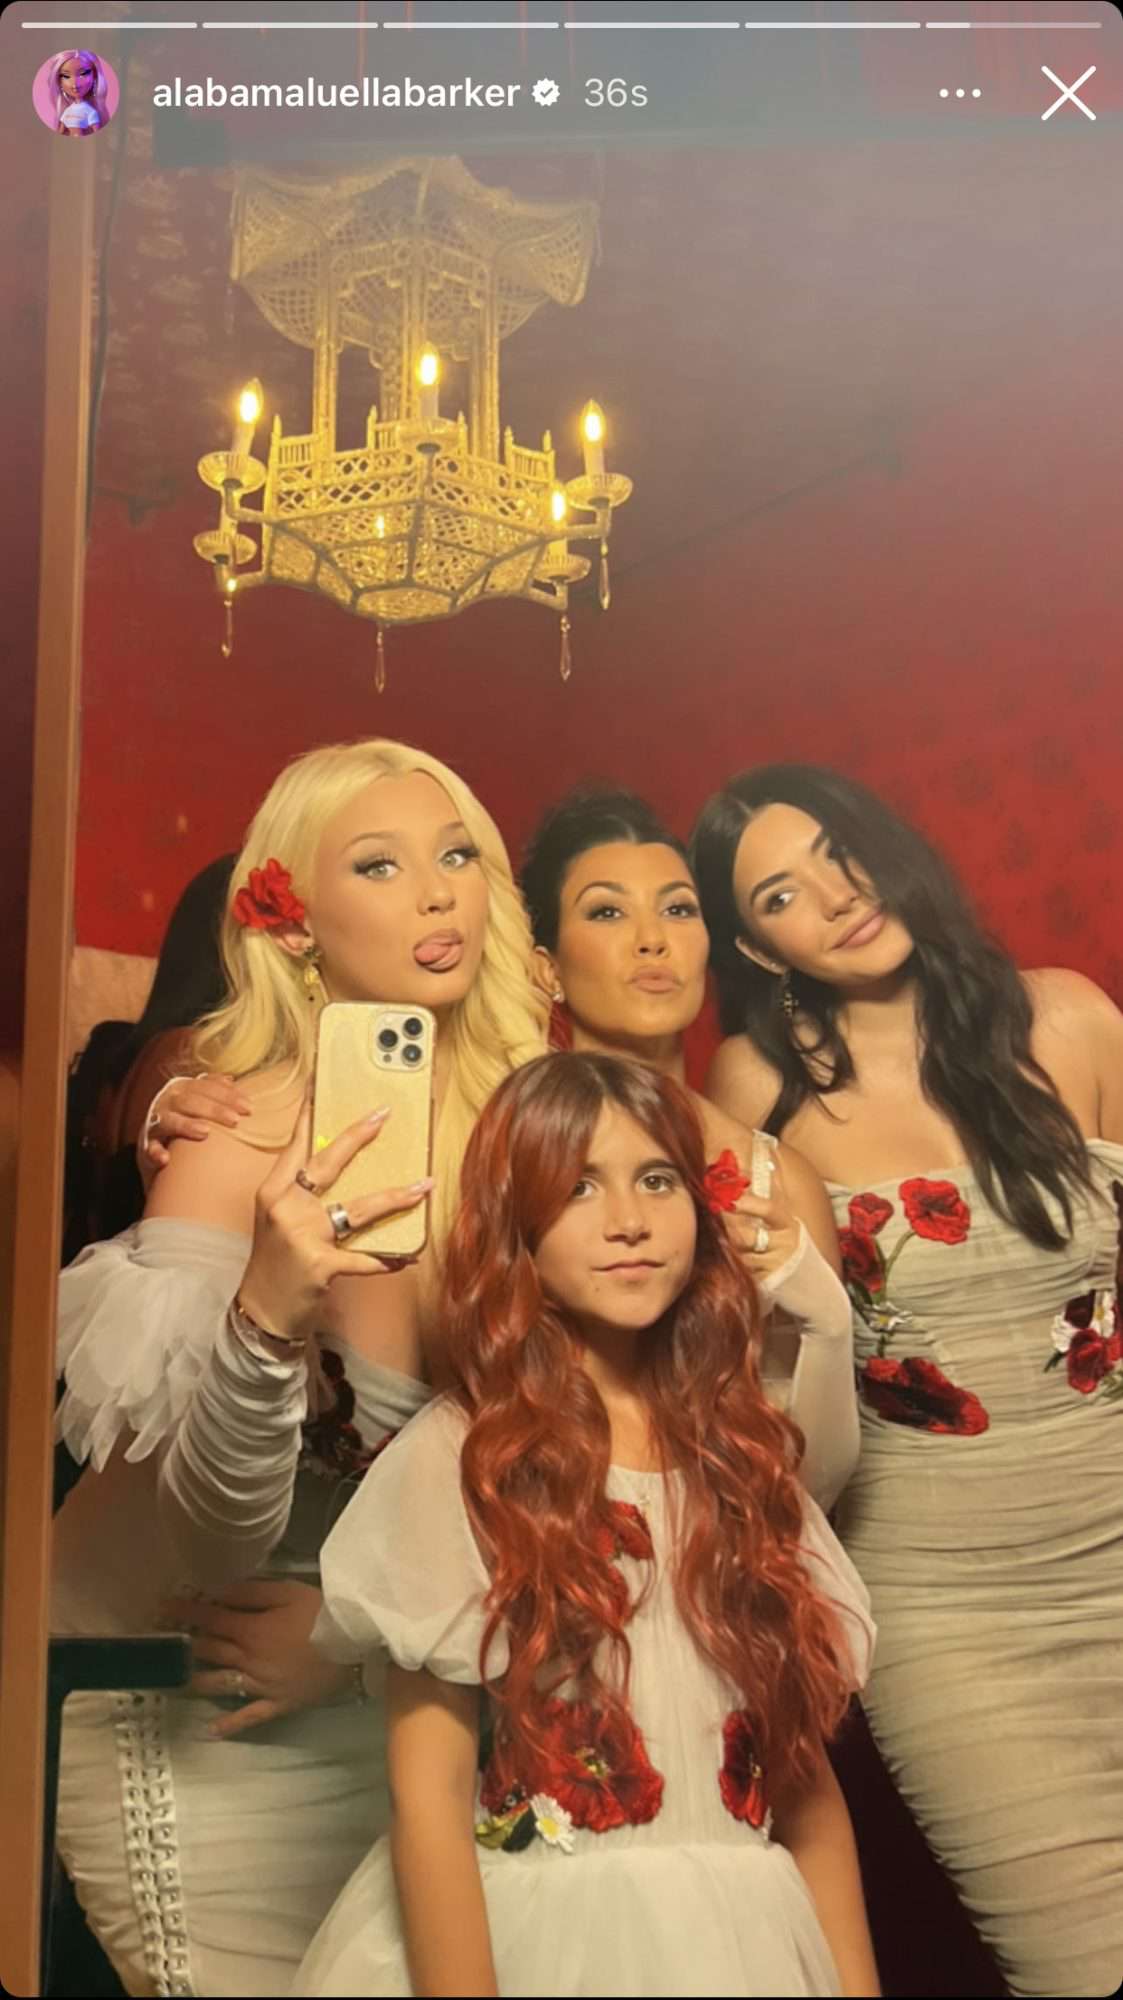 Kourtney Kardashian Stands Beside Daughter and Stepdaughter Bridesmaids at Wedding to Travis Barker. https://www.instagram.com/alabamaluellabarker/